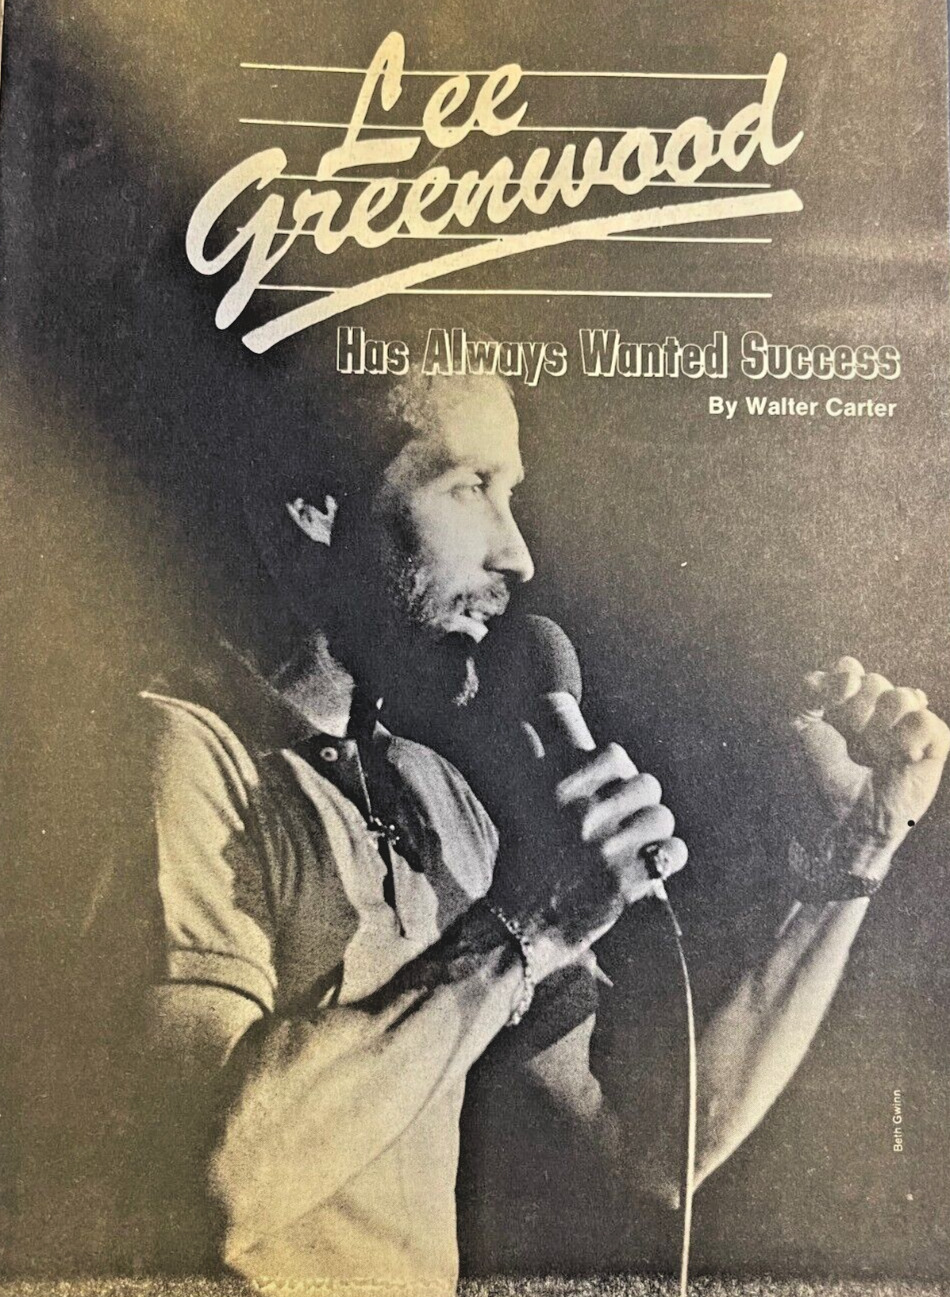 1987 Country Music Performer Lee Greenwood